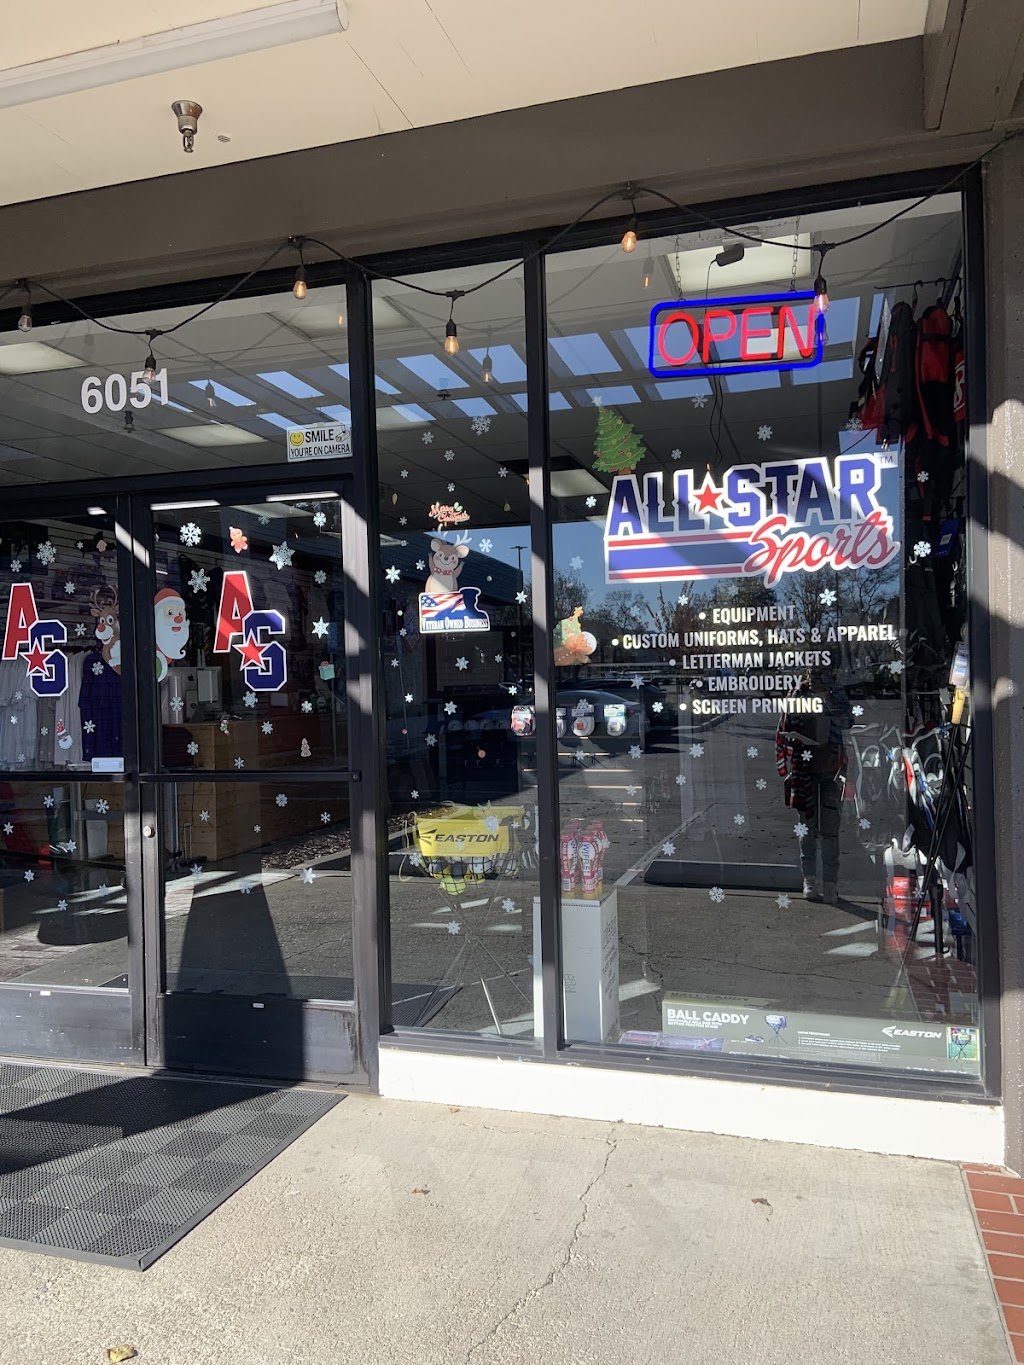 All Star Sports | 6051 W Las Positas Blvd, Pleasanton, CA 94588, USA | Phone: (925) 846-7928